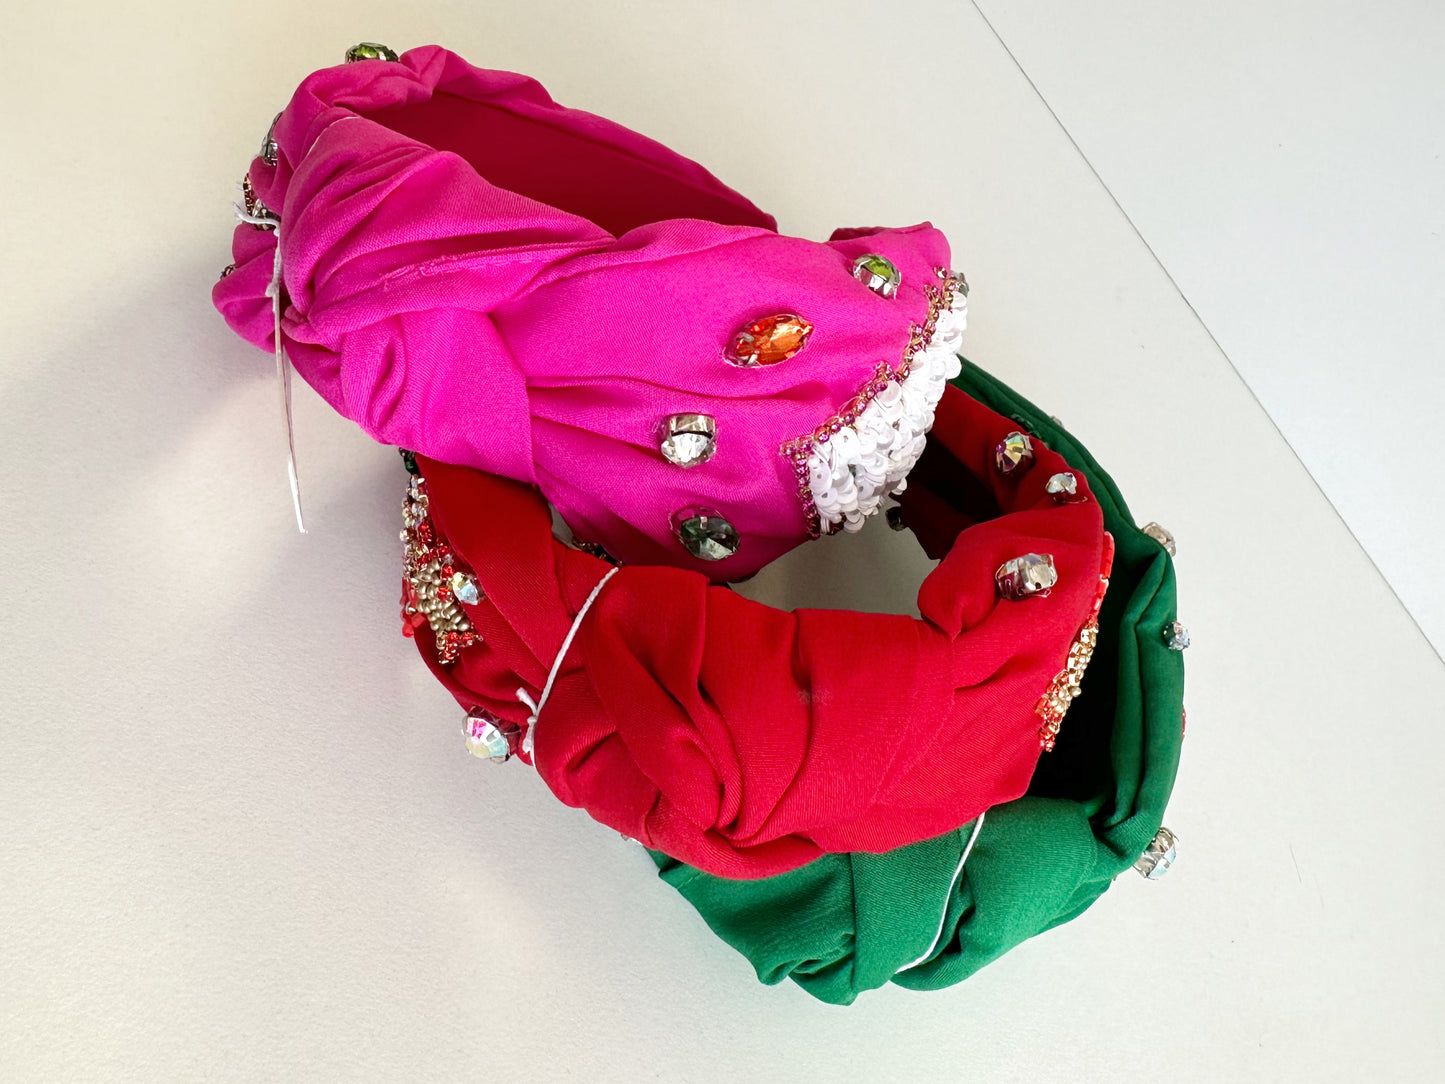 Jeweled Christmas tree headband pink